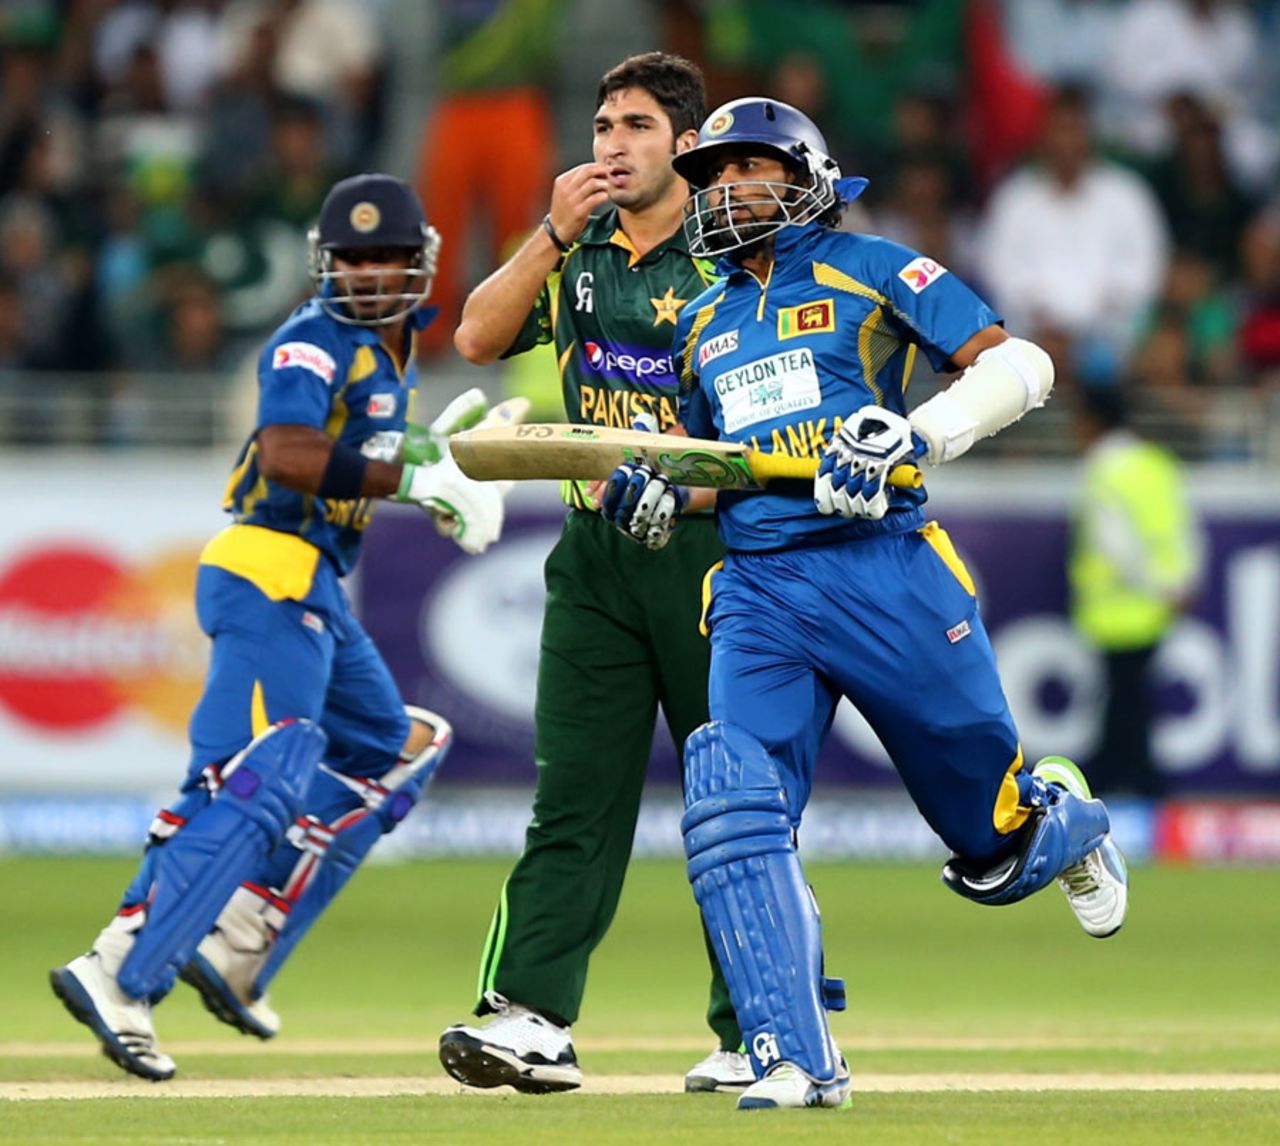 Tillakaratne Dilshan and Kusal Perera shared an opening stand of 100 runs, Pakistan v Sri Lanka, 2nd T20, Dubai, December 13, 2013